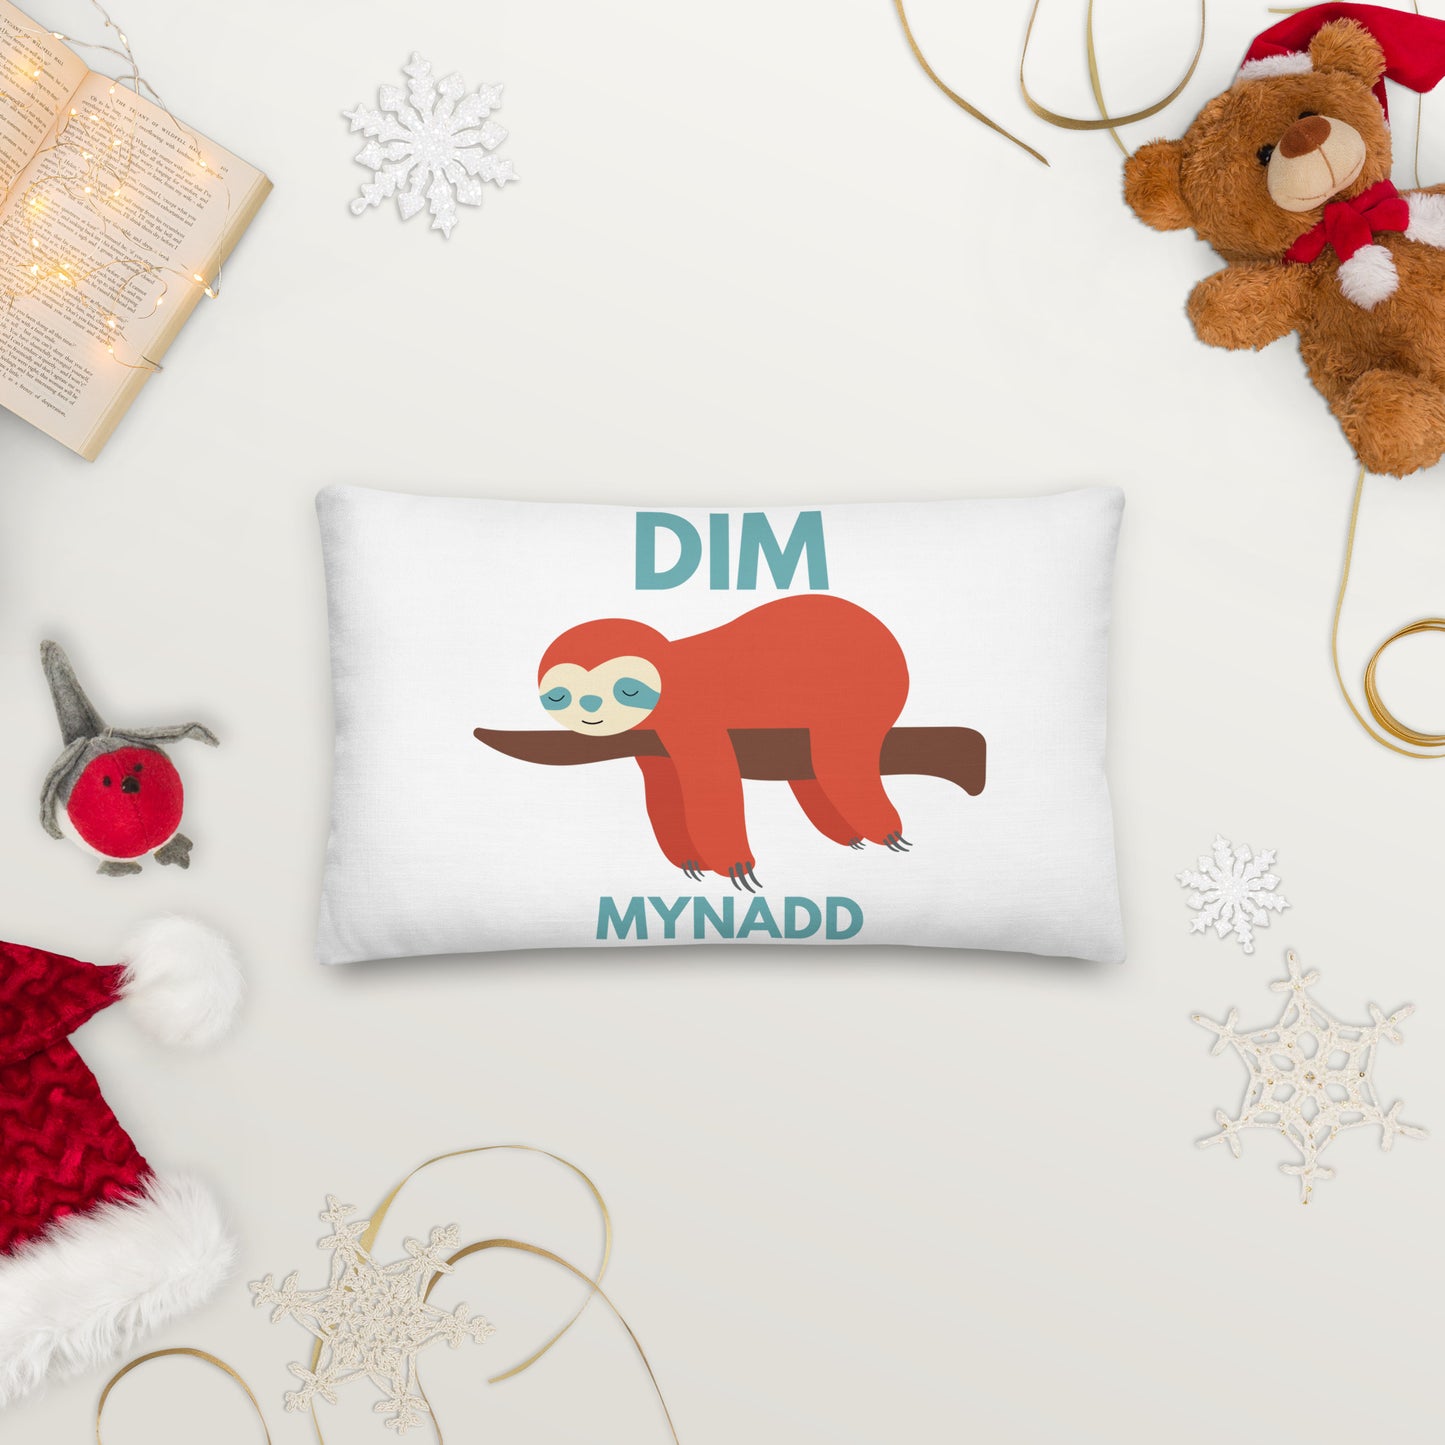 Dim Mynadd - Premium Pillow